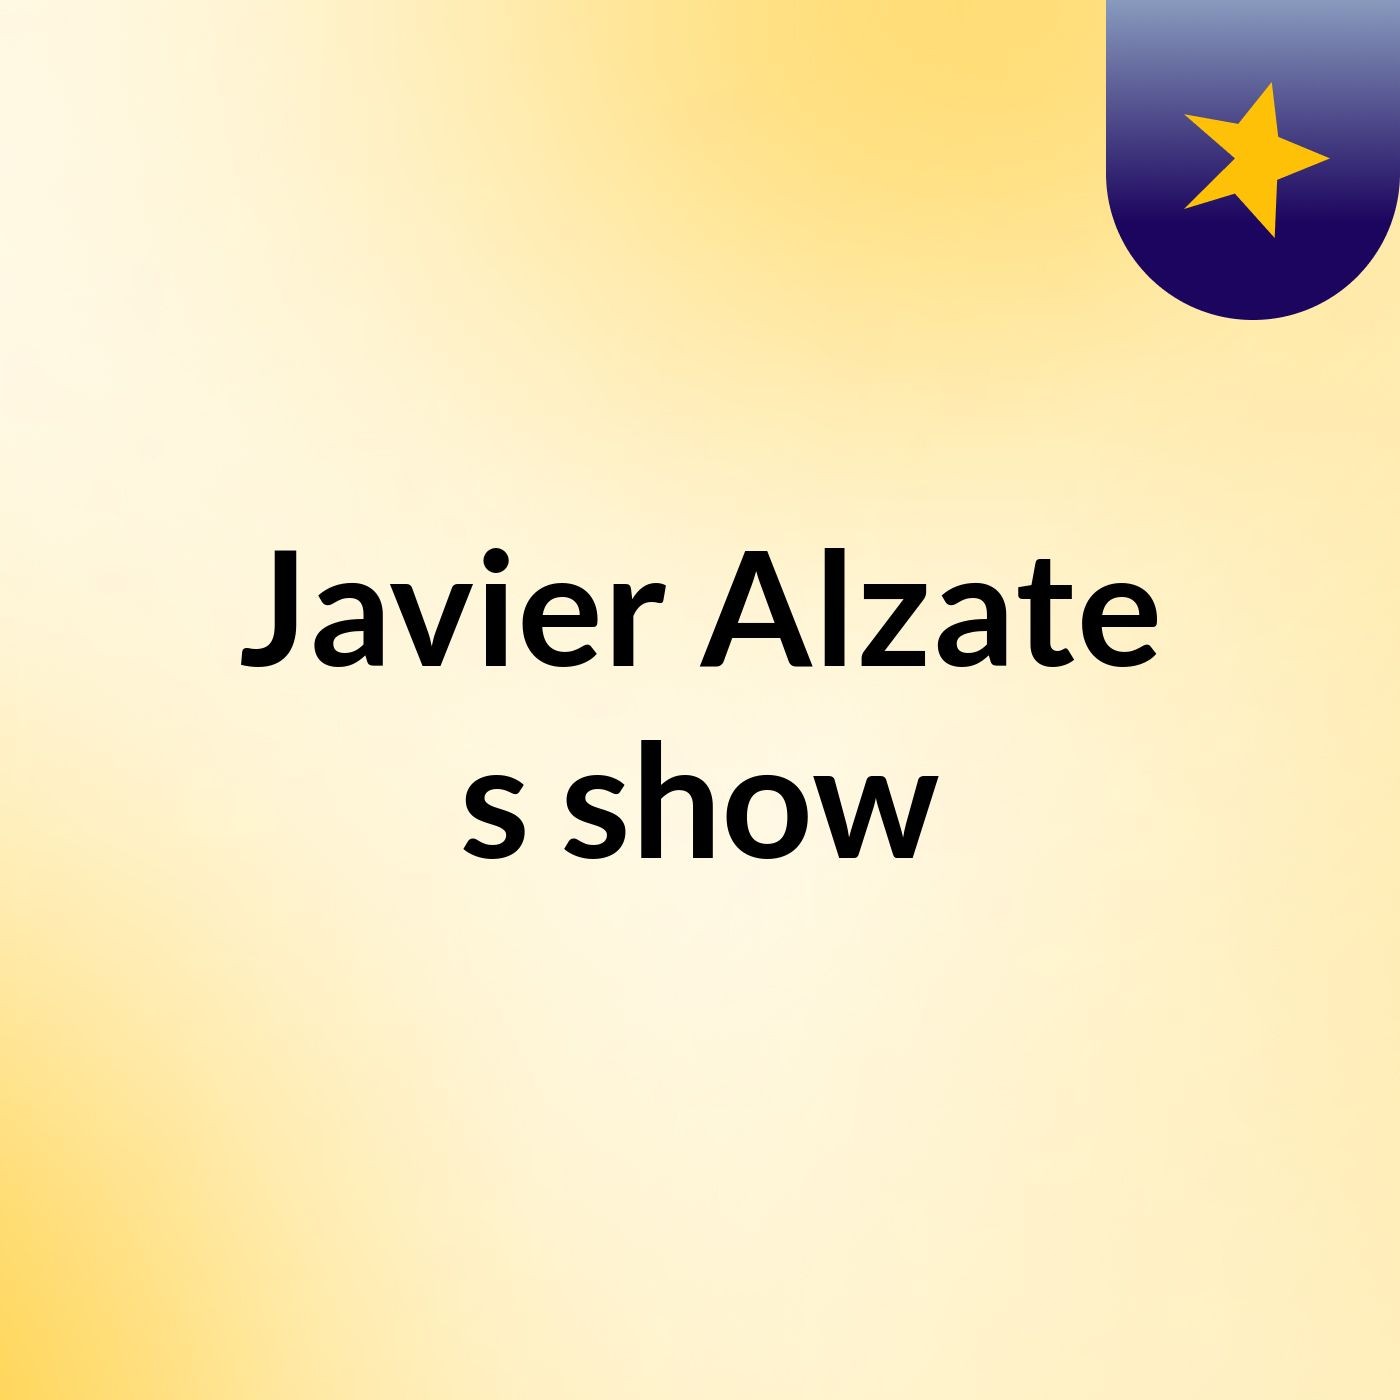 Javier Alzate's show